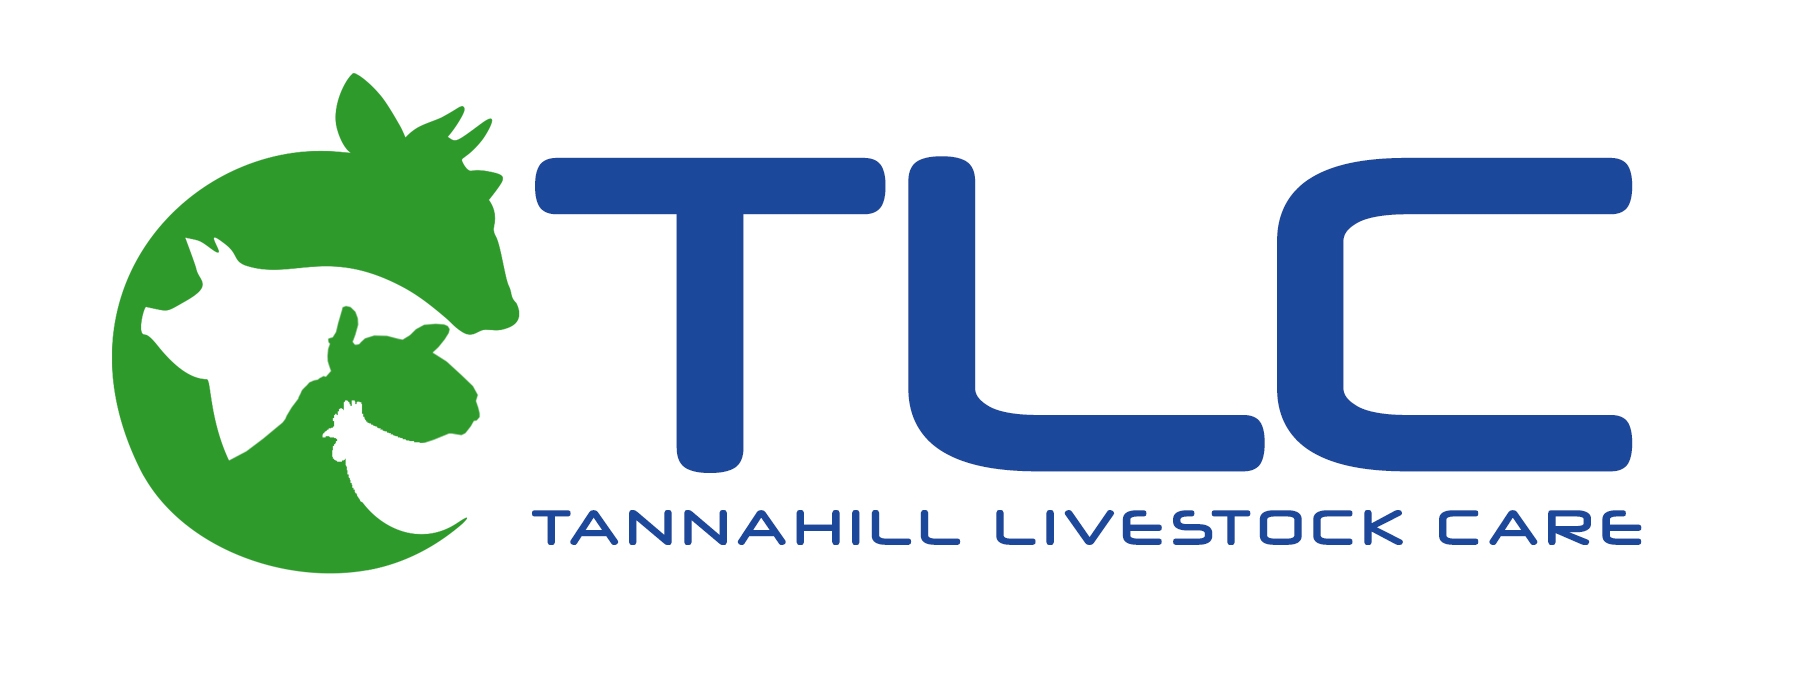 products-tannahill_livestock_care_logo